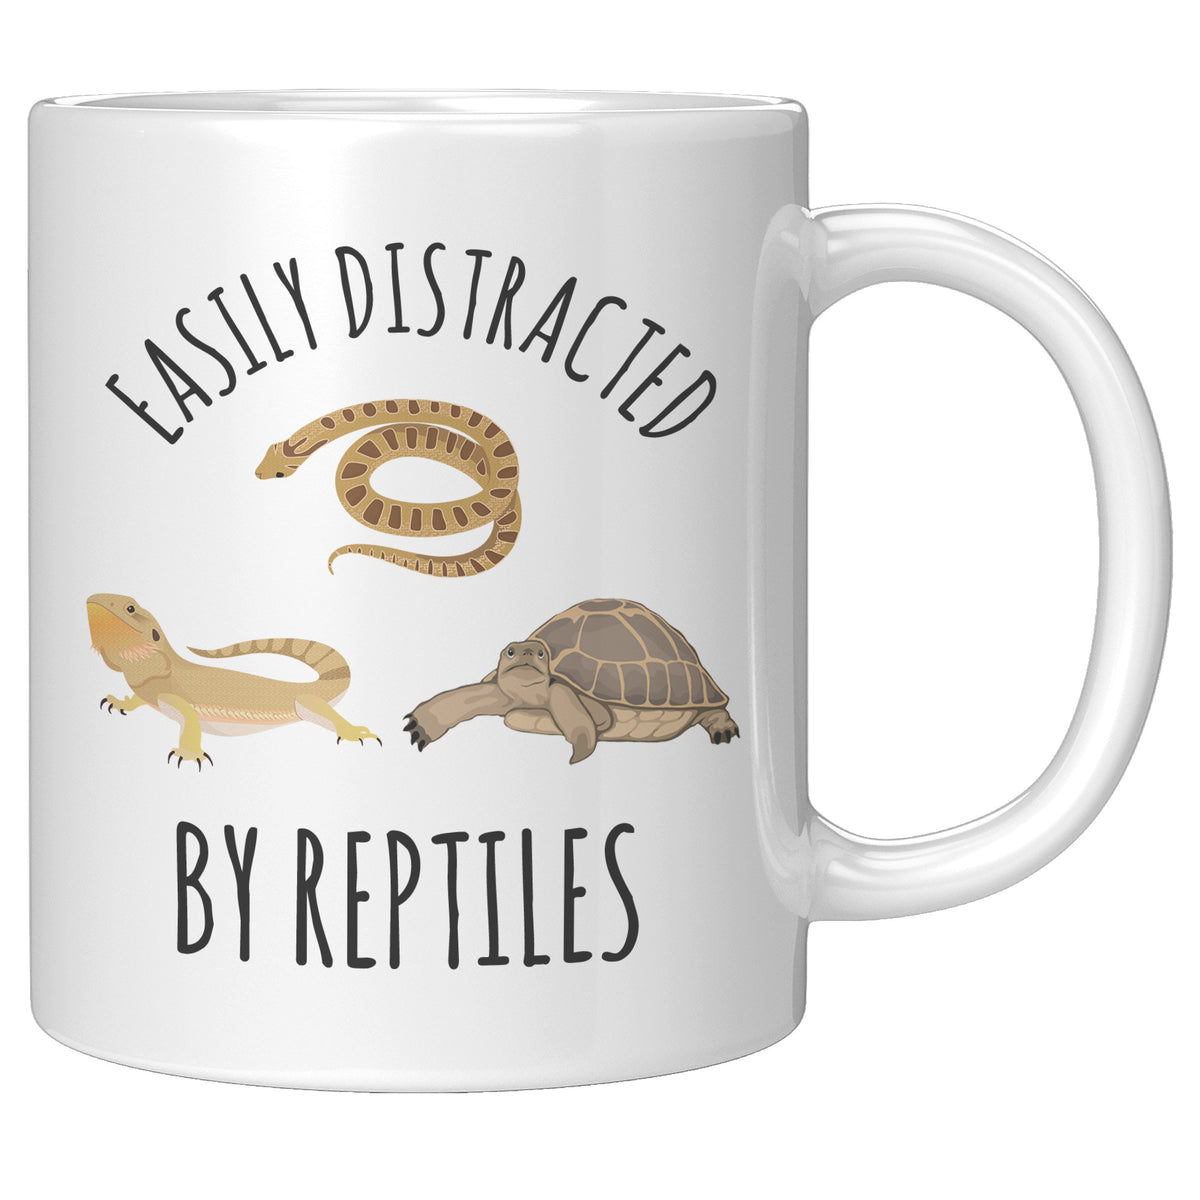 Reptile Mug - Easily Distracted by Reptiles